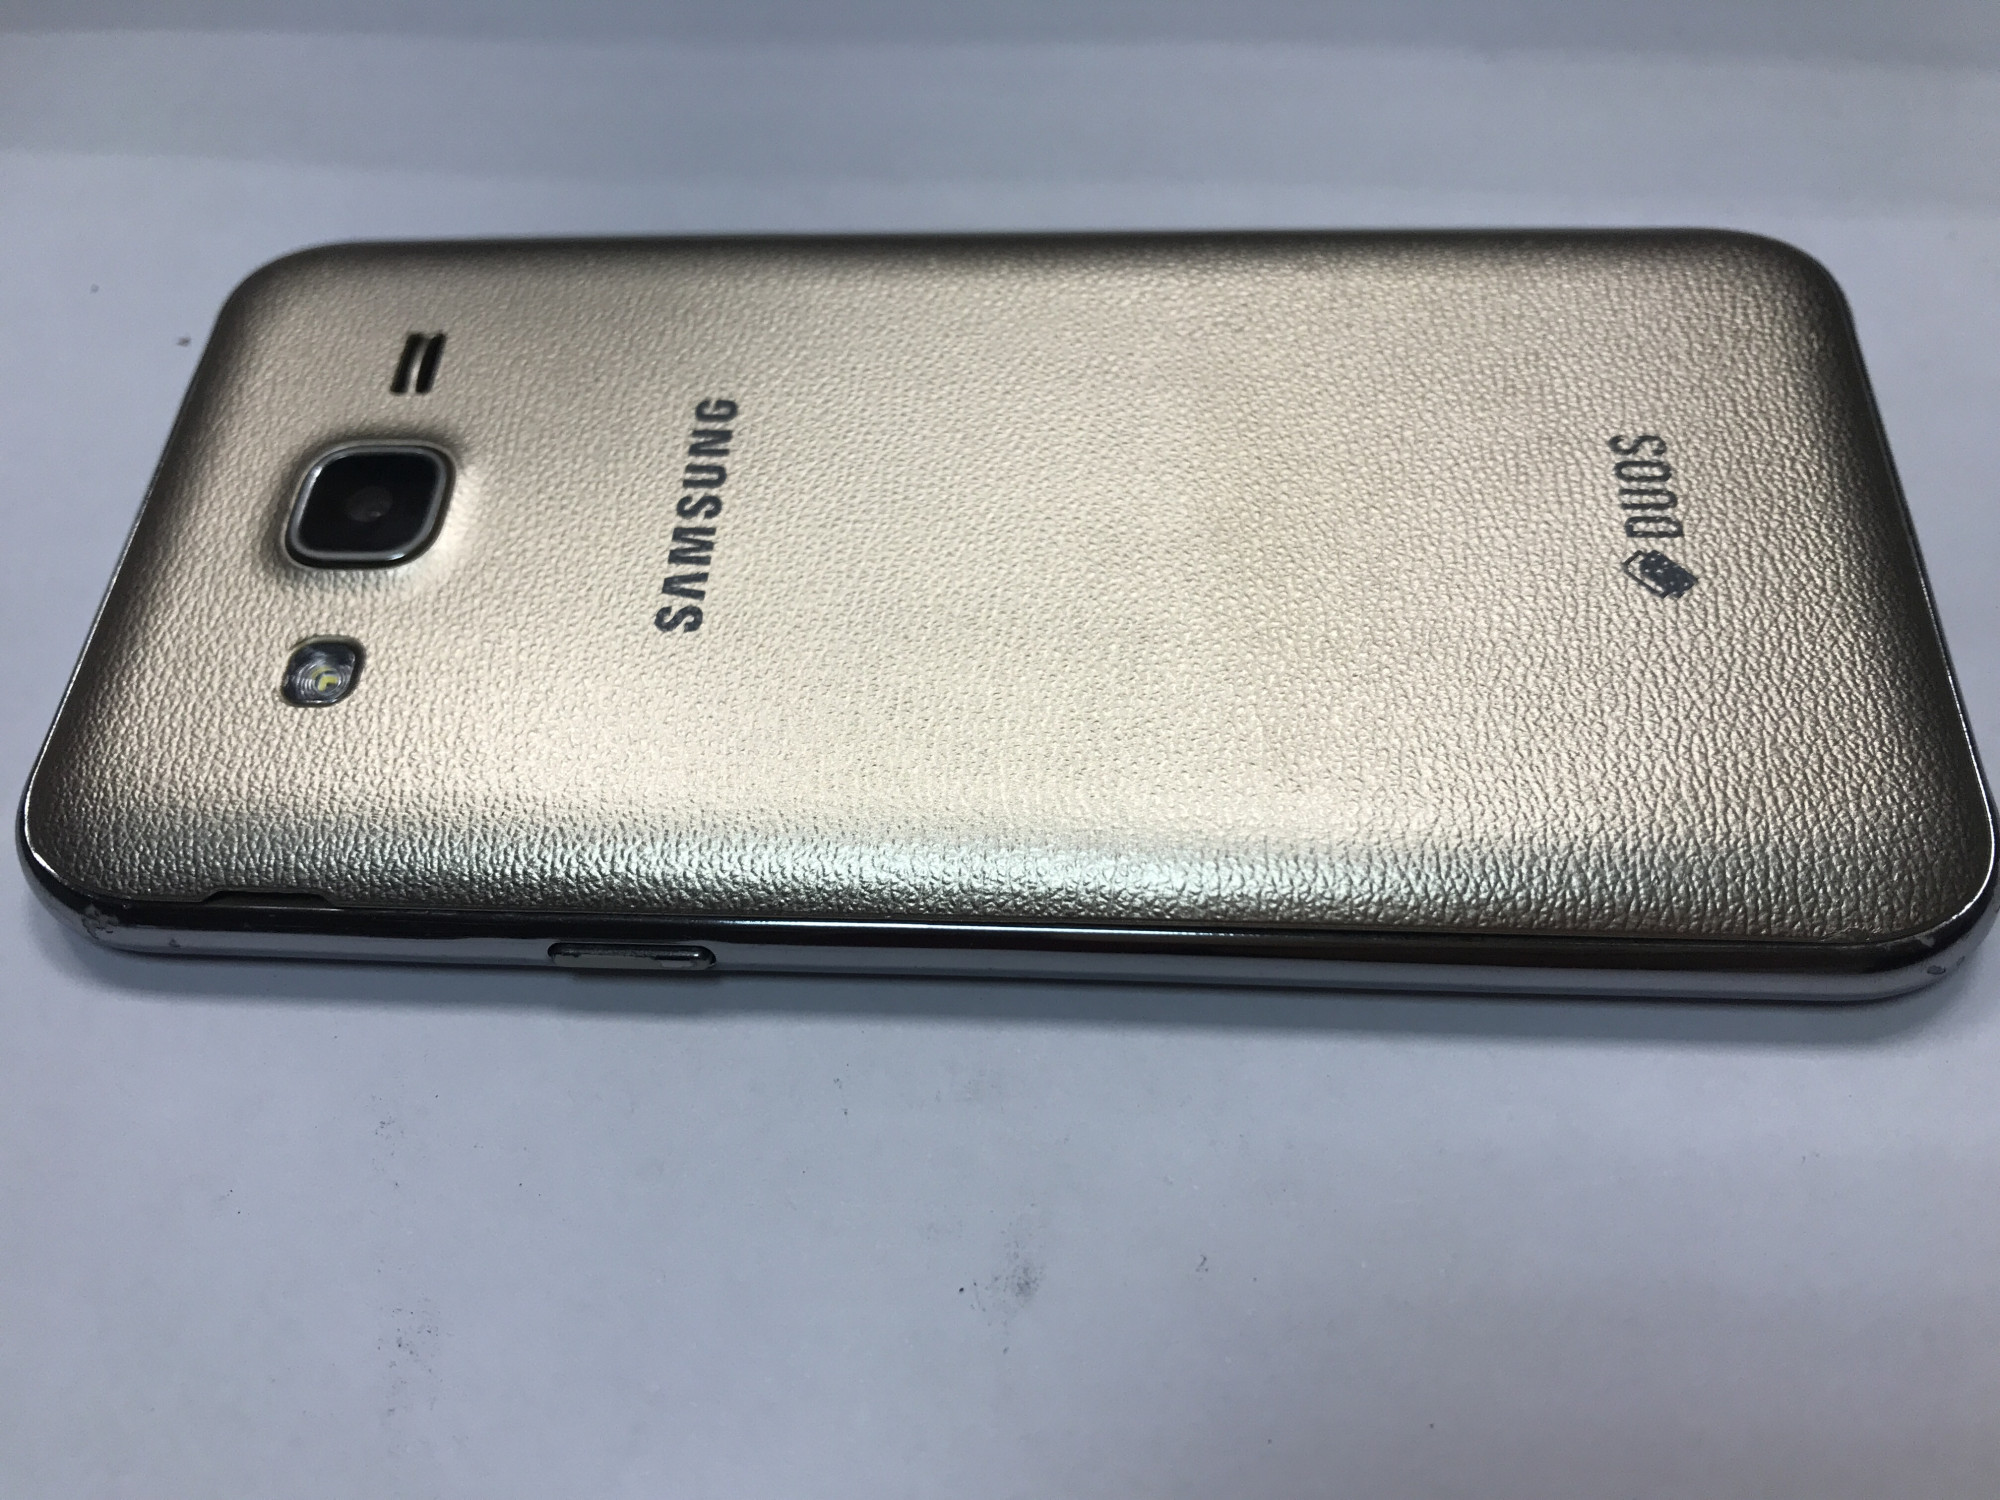 Samsung Galaxy J2 (SM-J200H) 1/8Gb 4